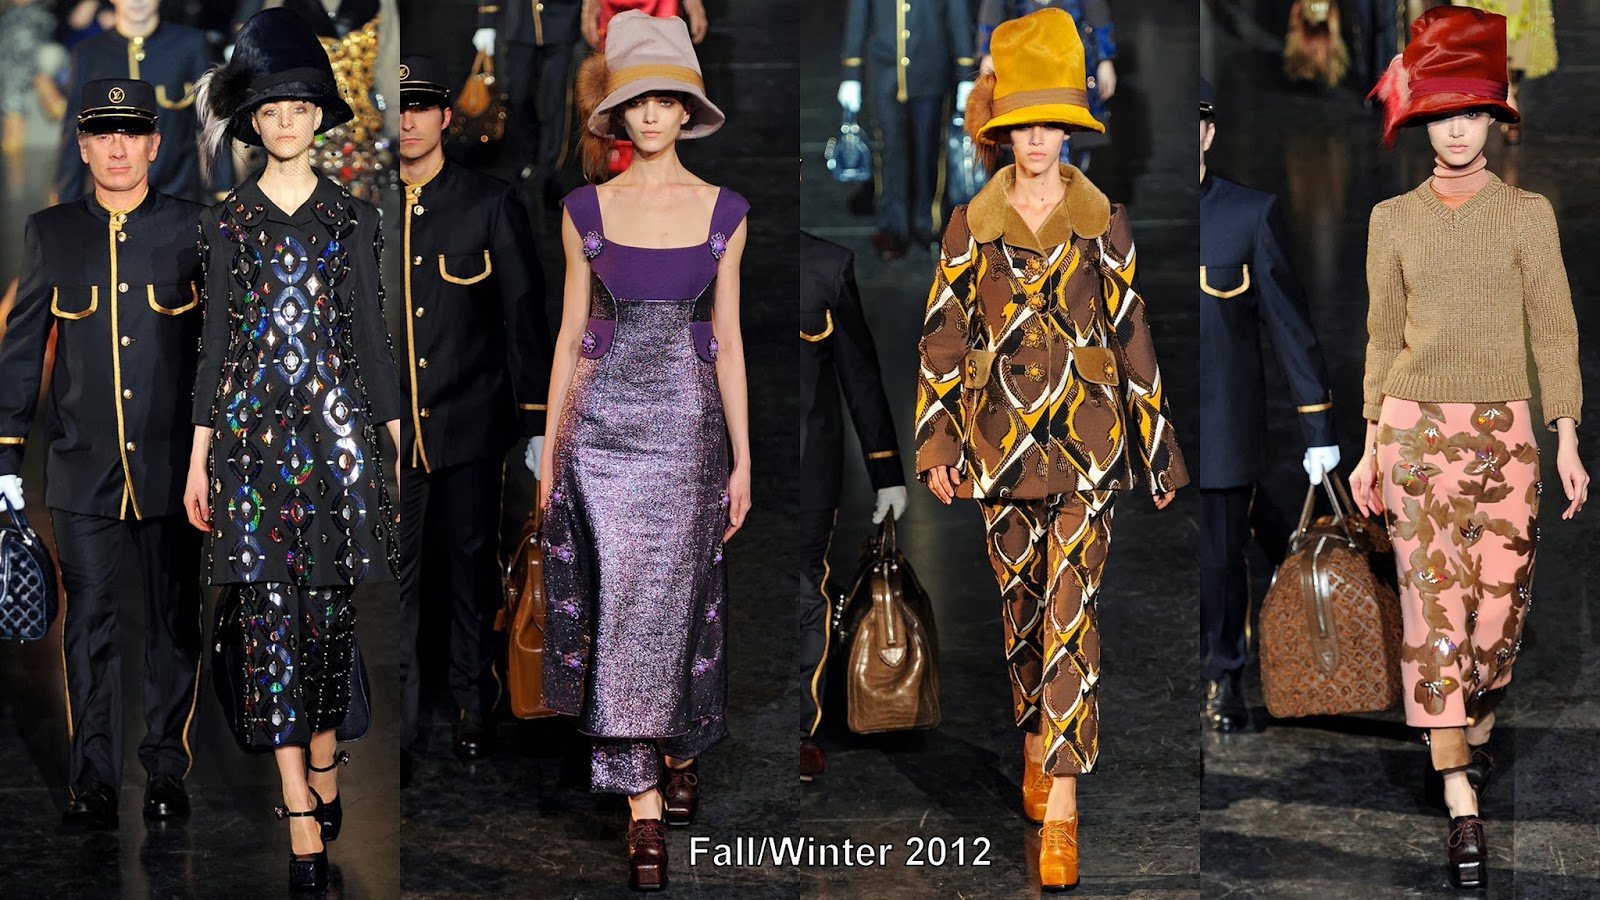 Louis Vuitton Petit Damier NM Hat - dress. Raleigh